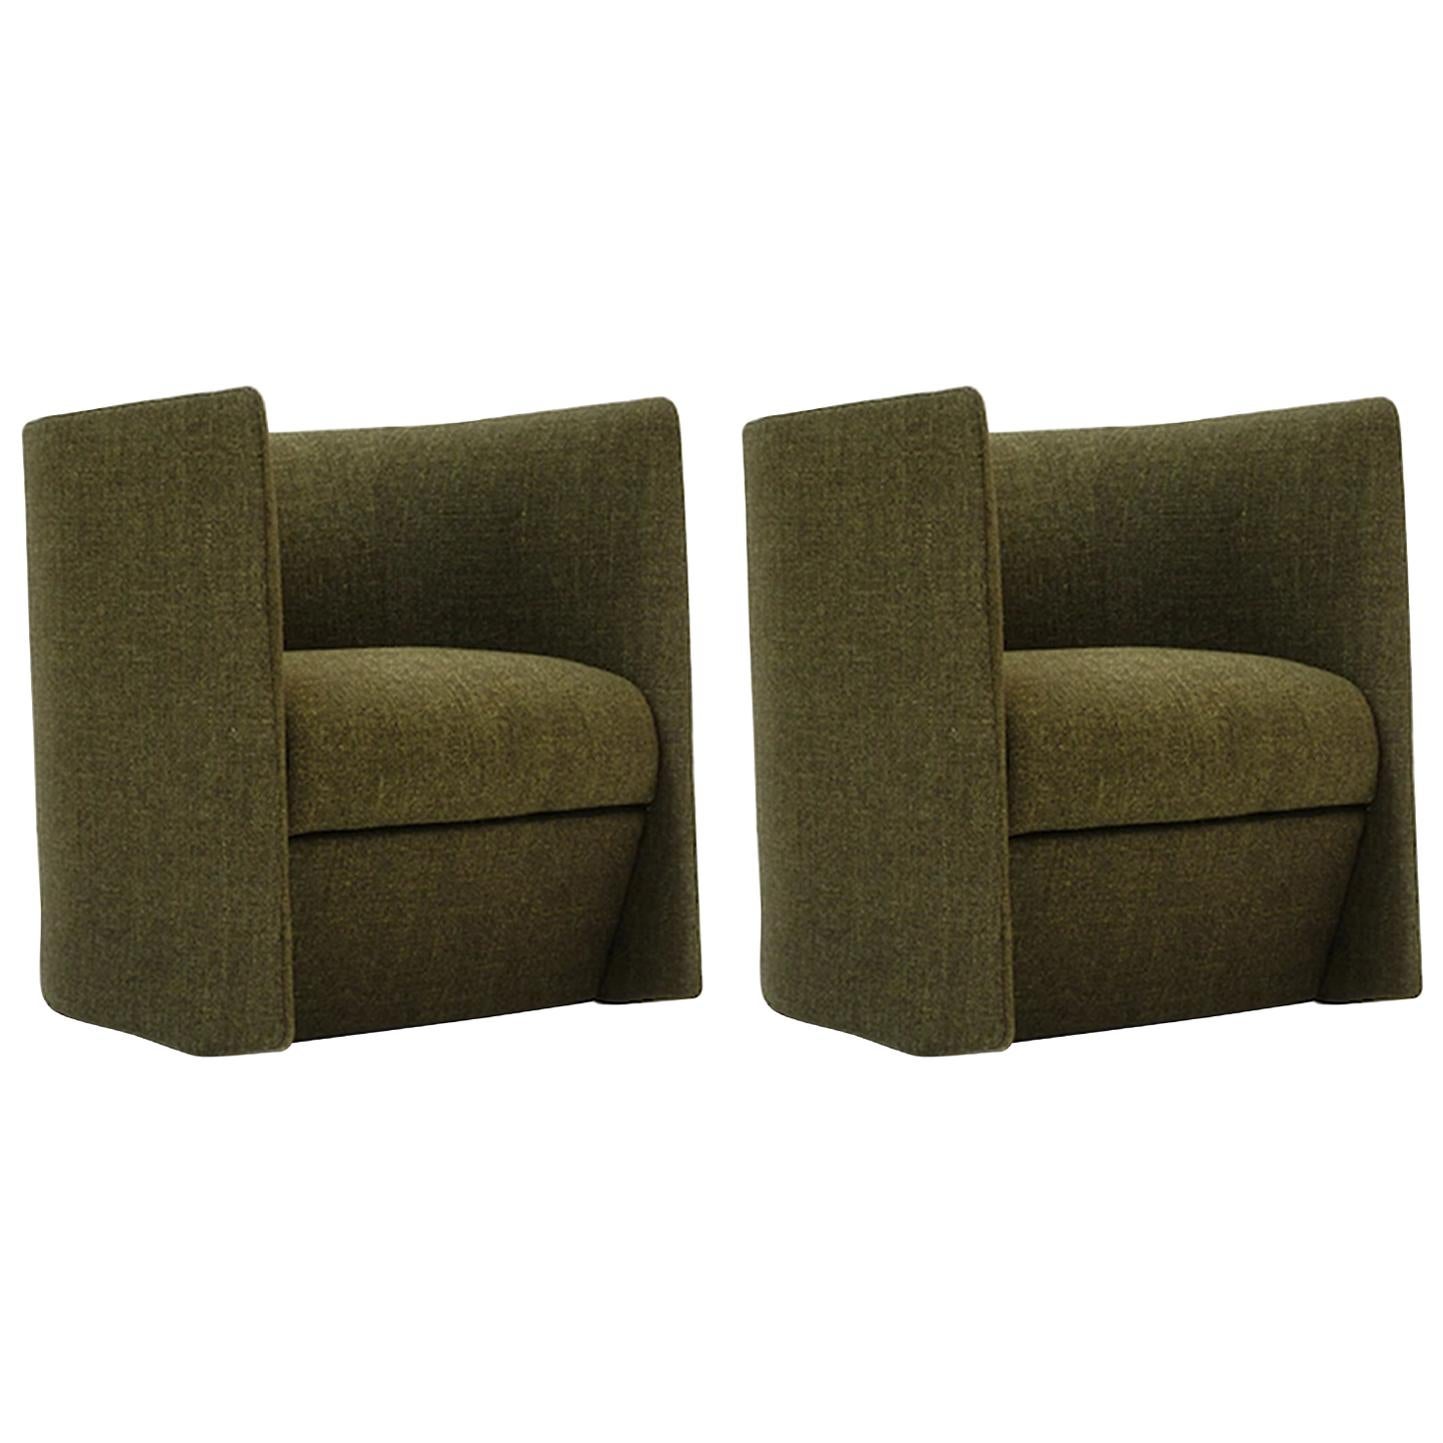 Anpassbarer Tacchini Dreh-Sessel aus zwei Pisa-Sesseln von Claesson Koivisto Rune